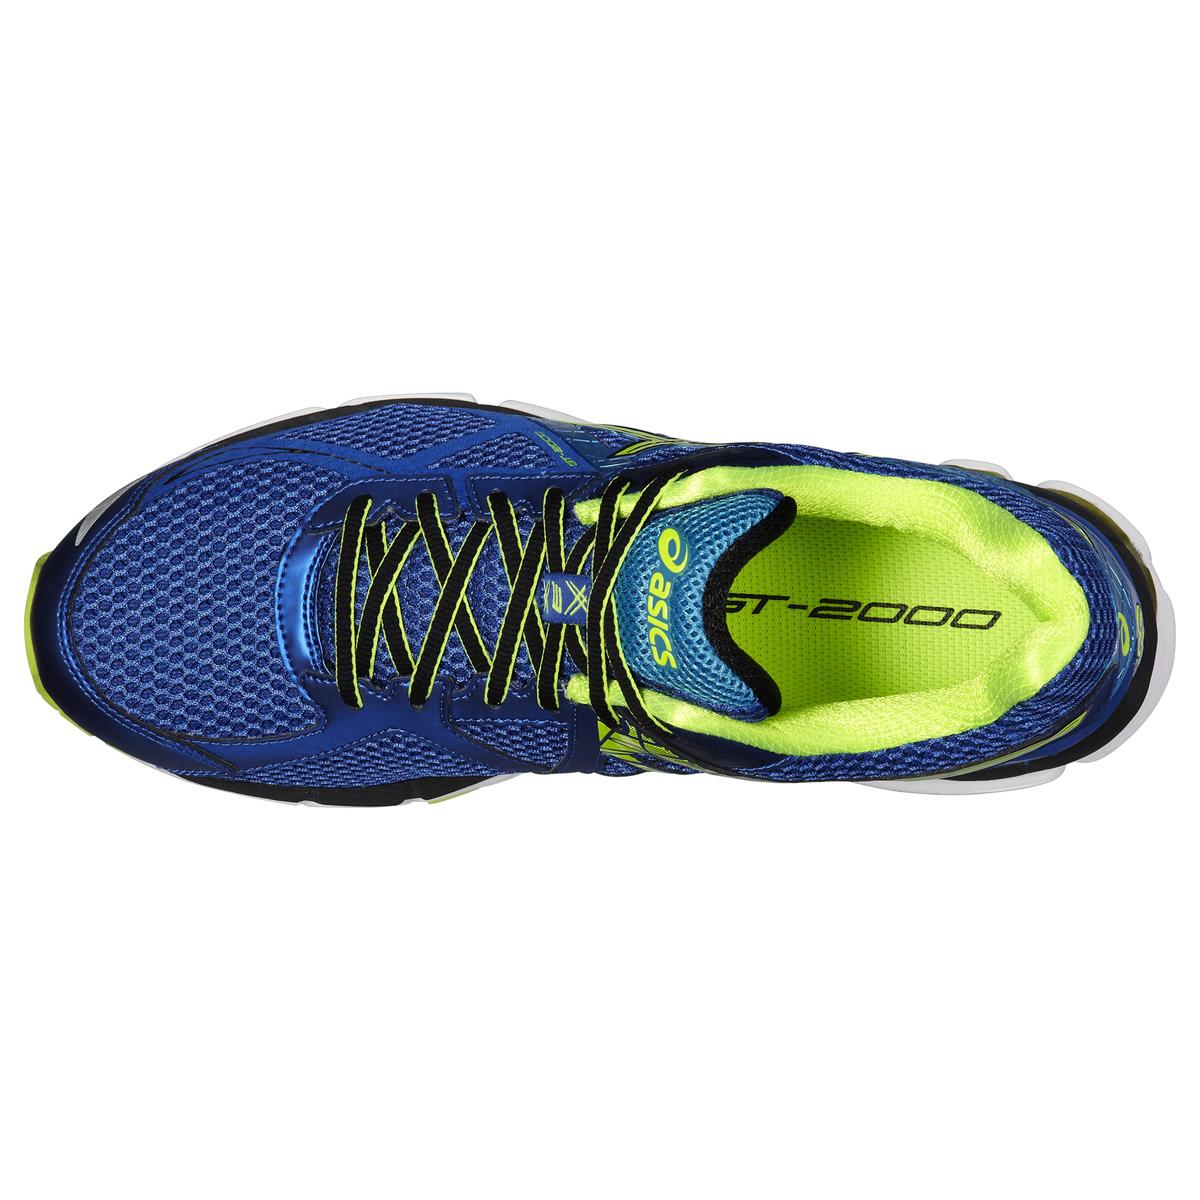 Asics Mens GT-2000 3 Running Shoes - Atomic Blue/Flash Yellow ...